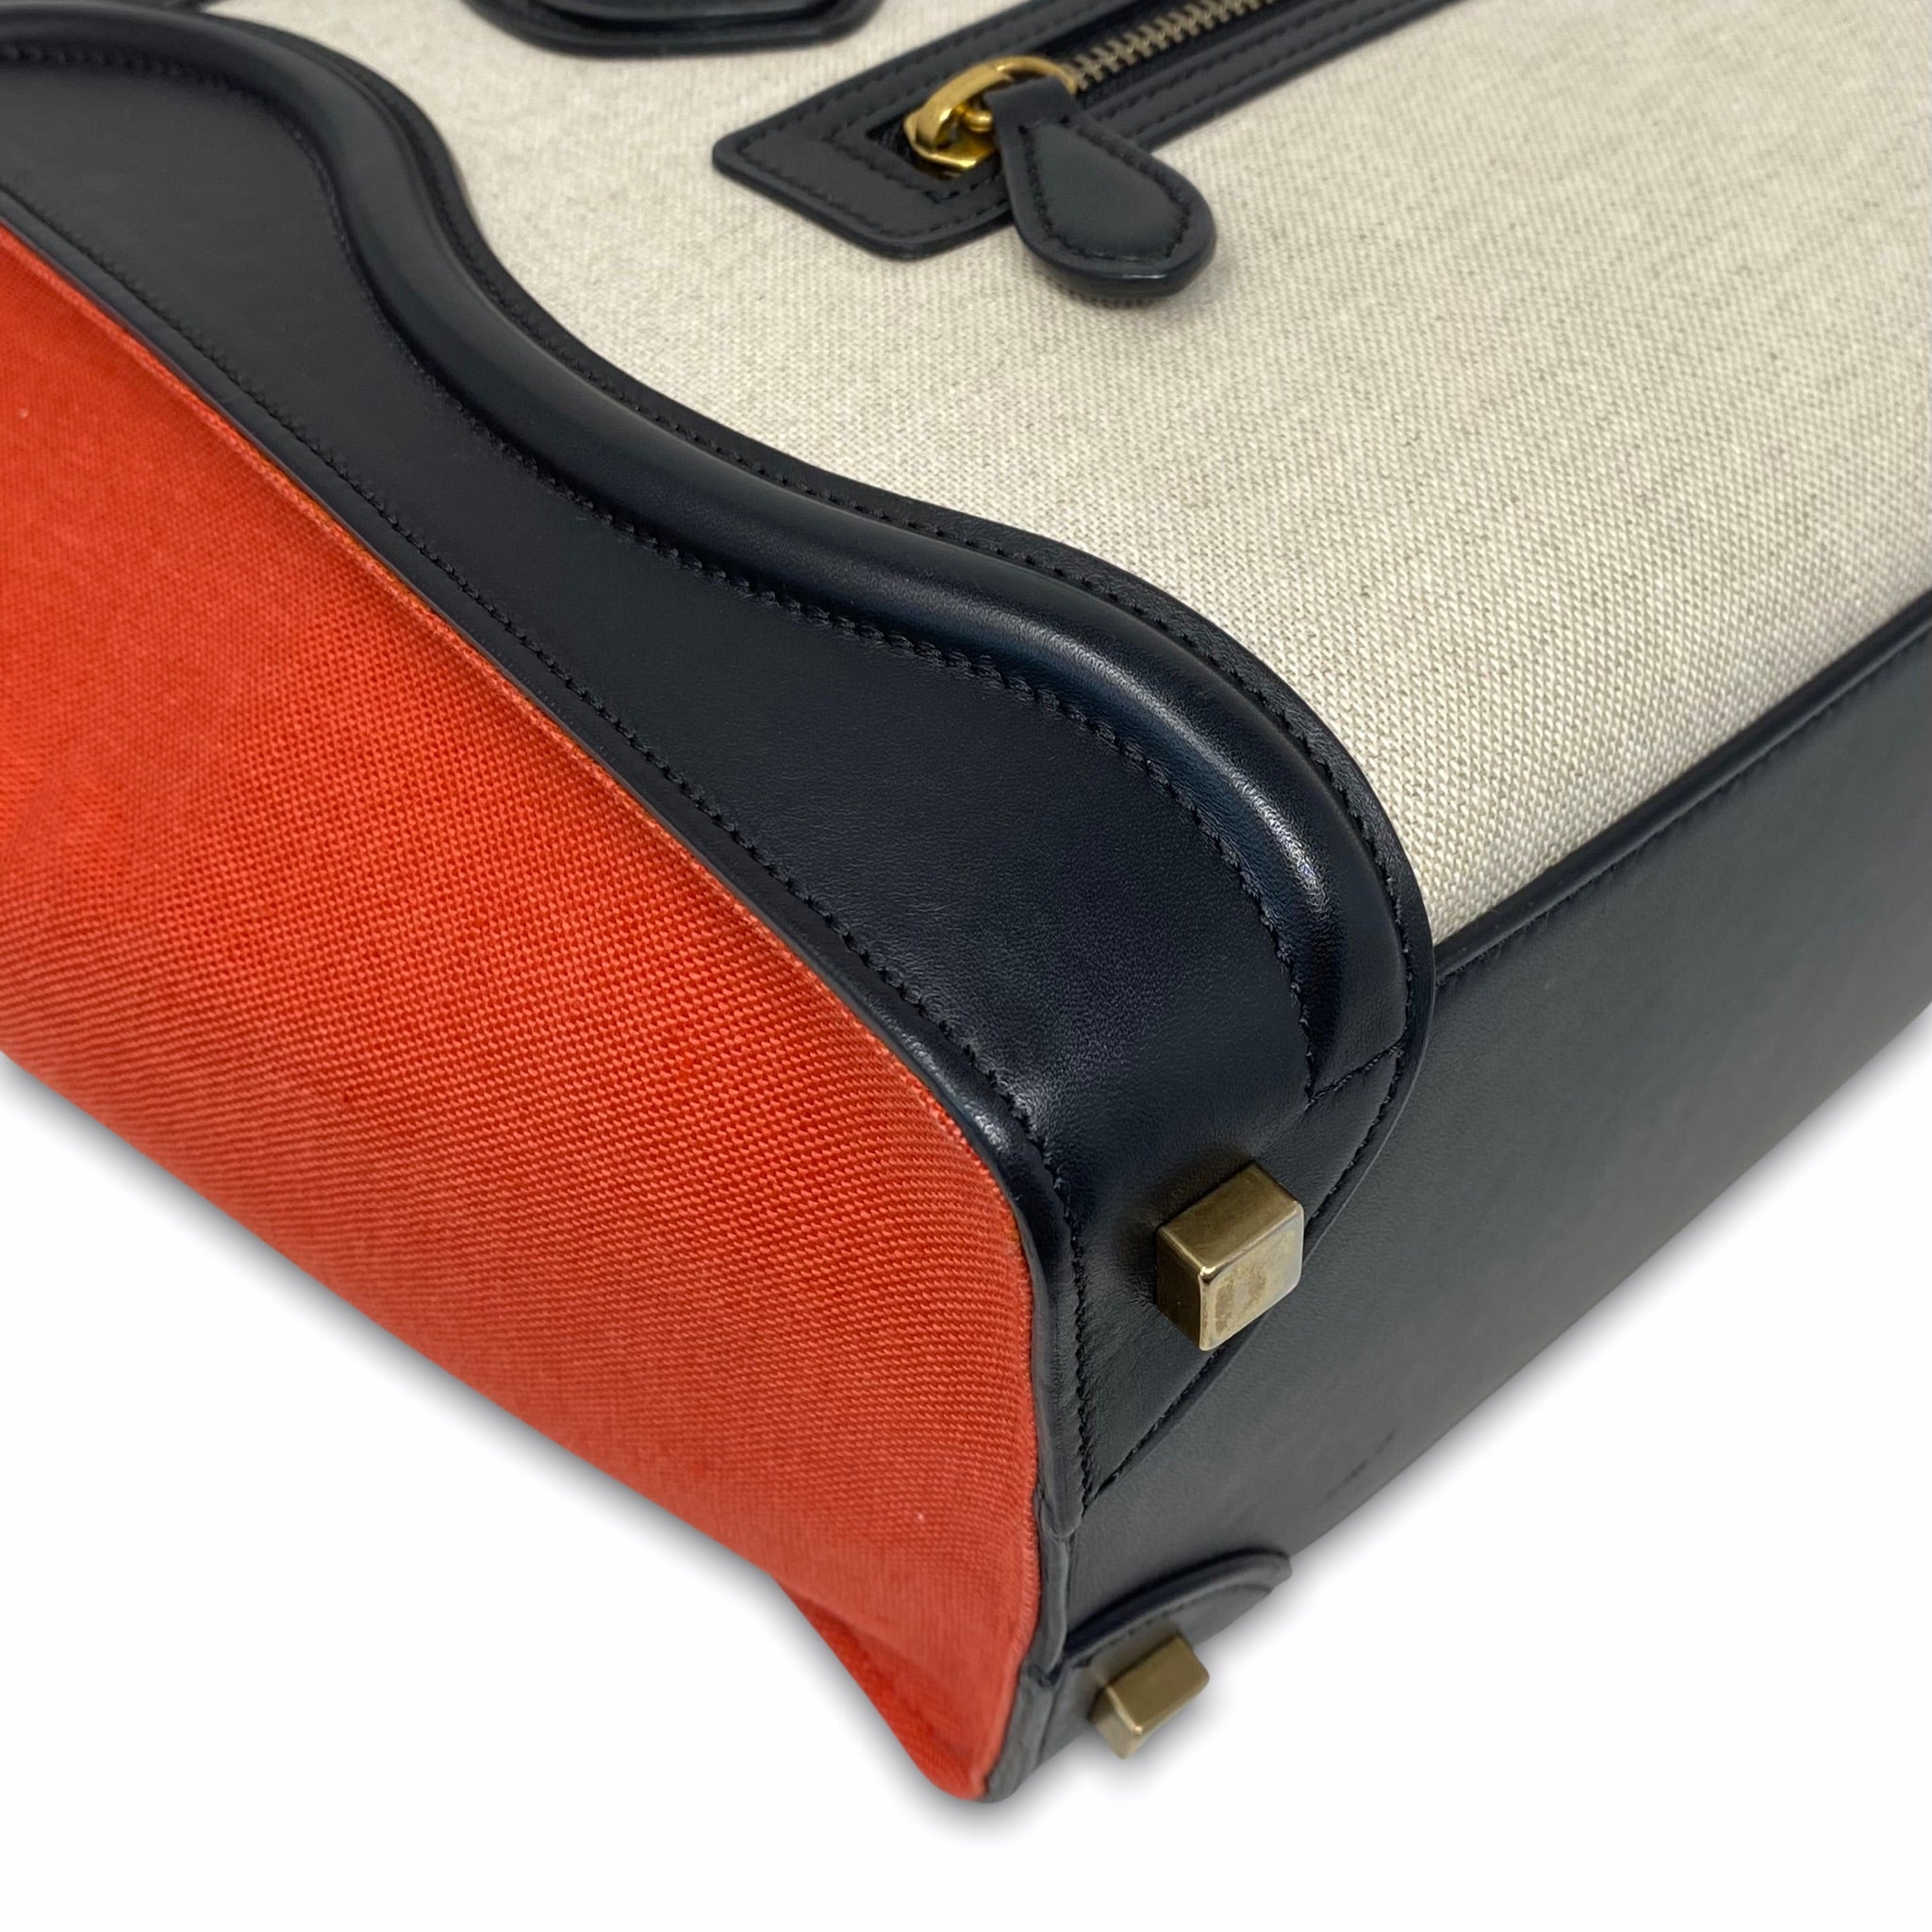 Celine Tri-color Micro Luggage Bag